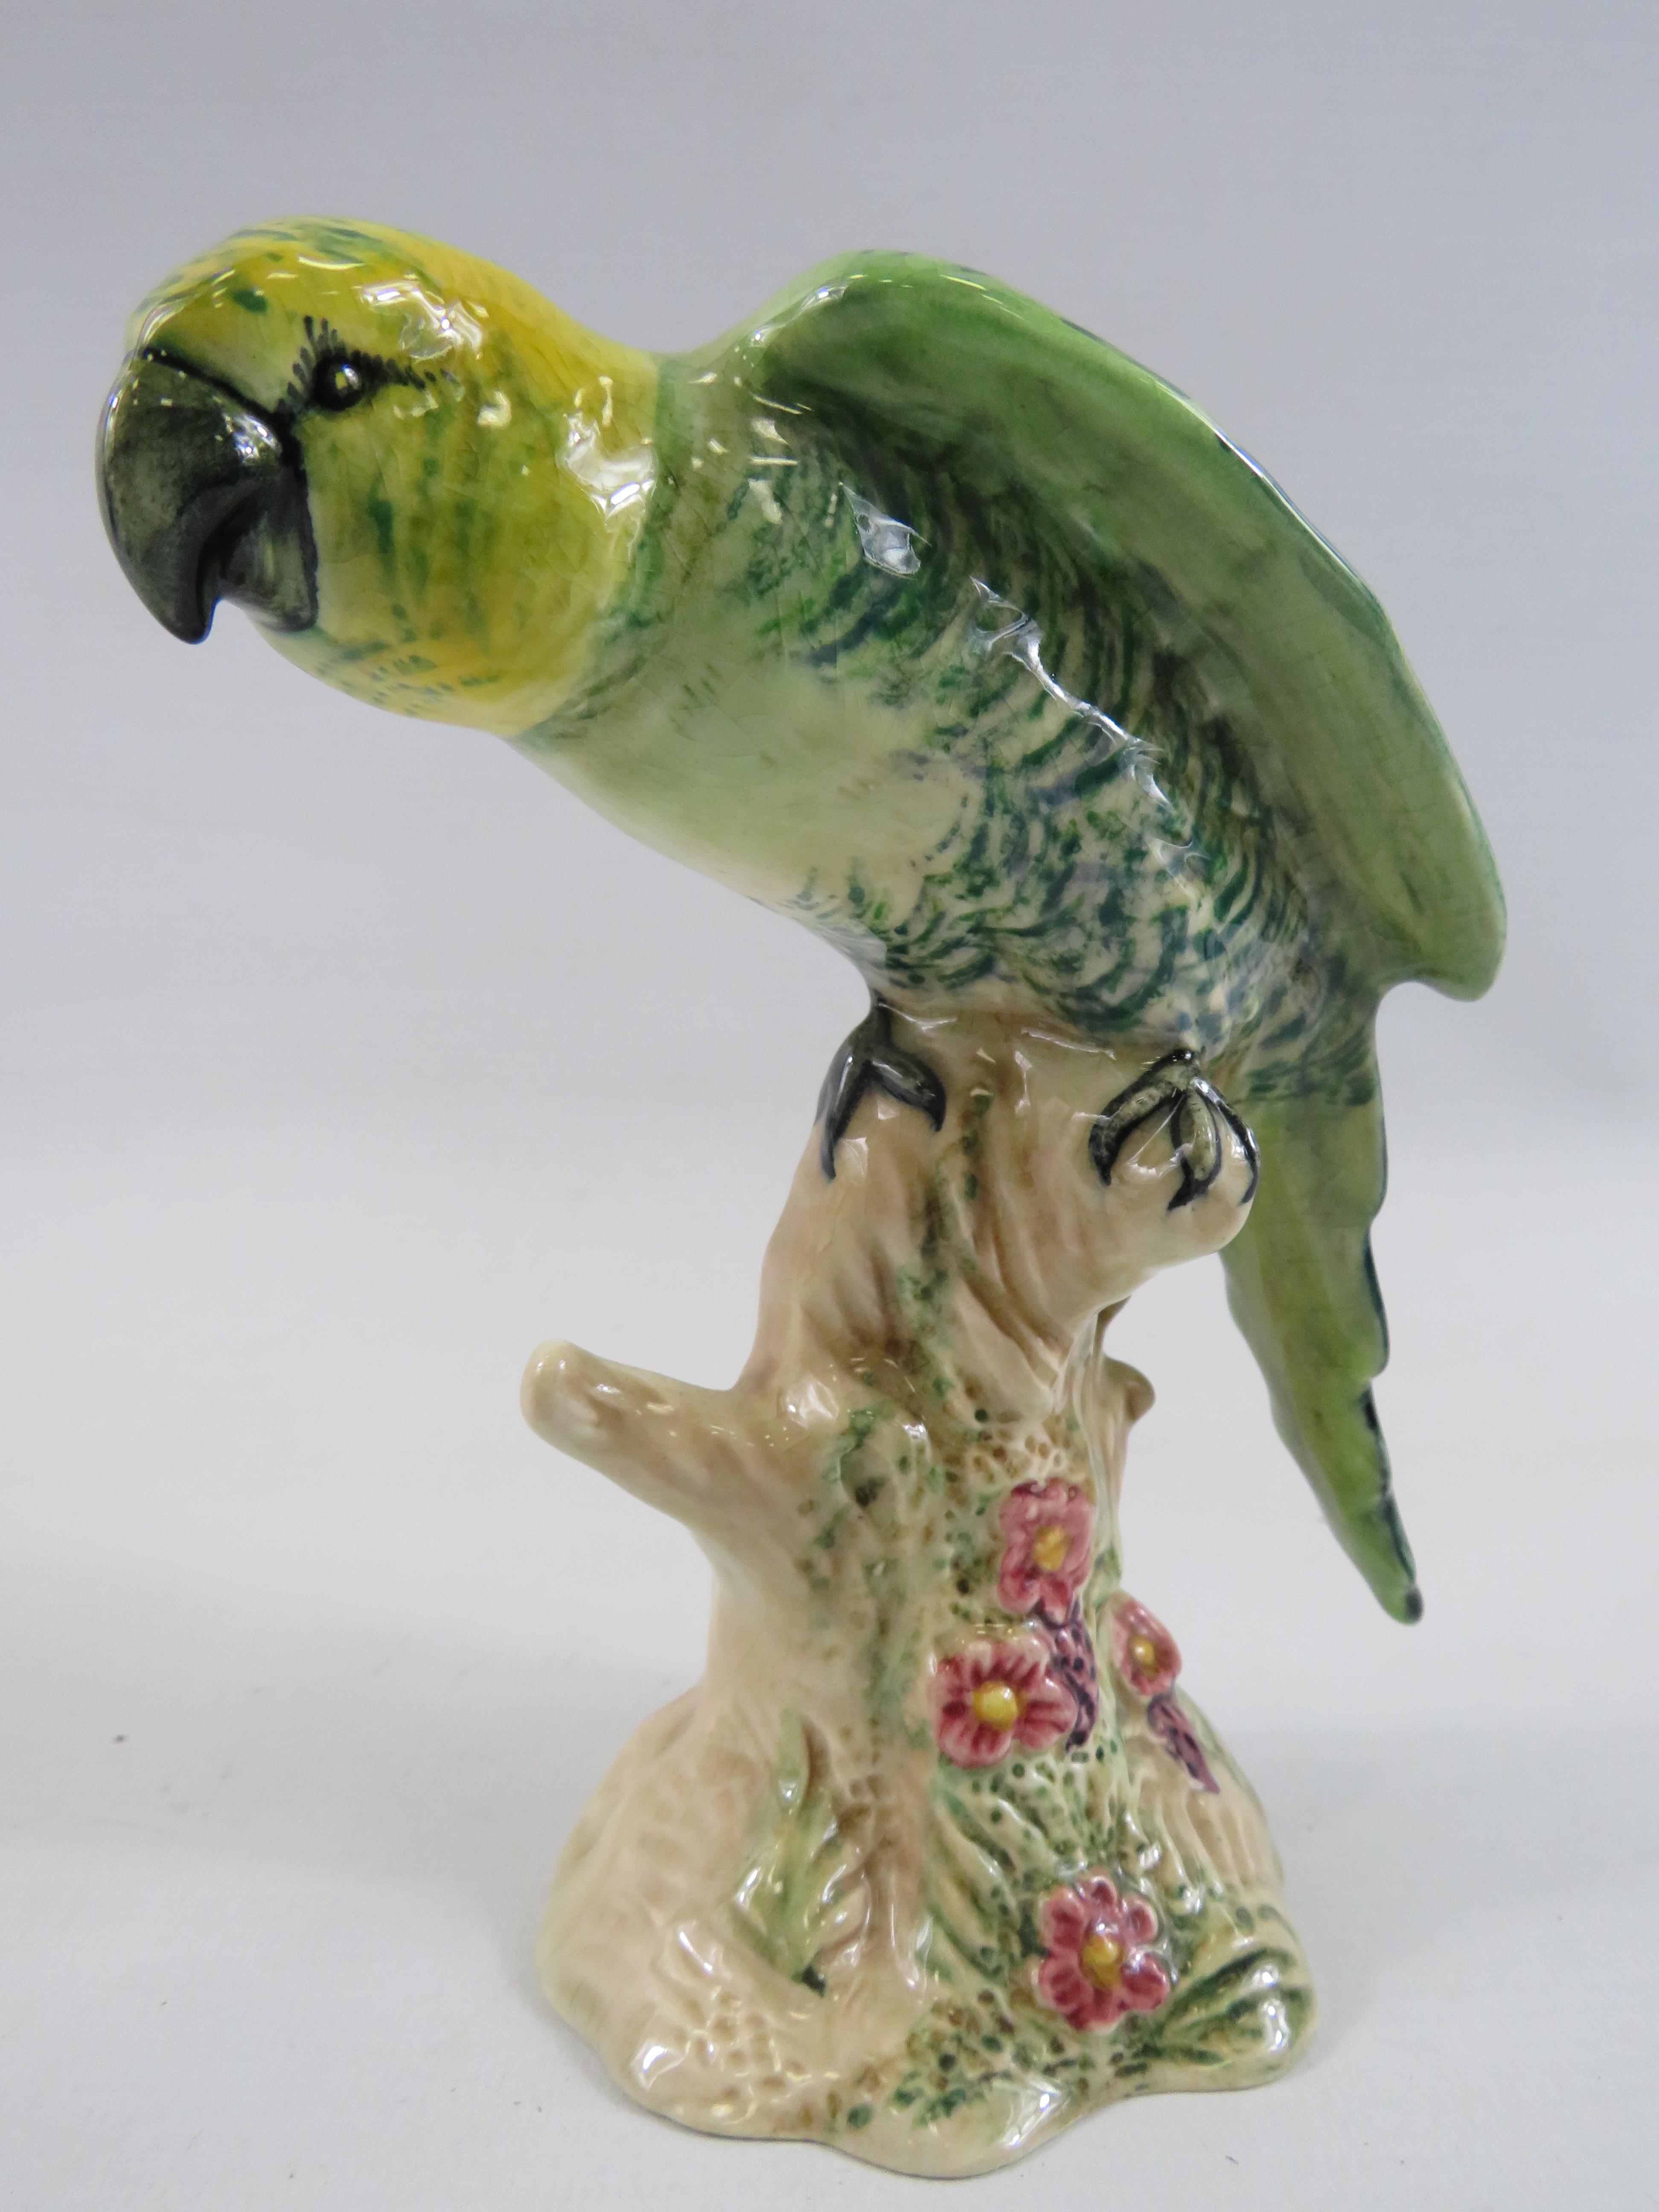 Beswick green parrot figurine, model no 930. approx 6" tall.